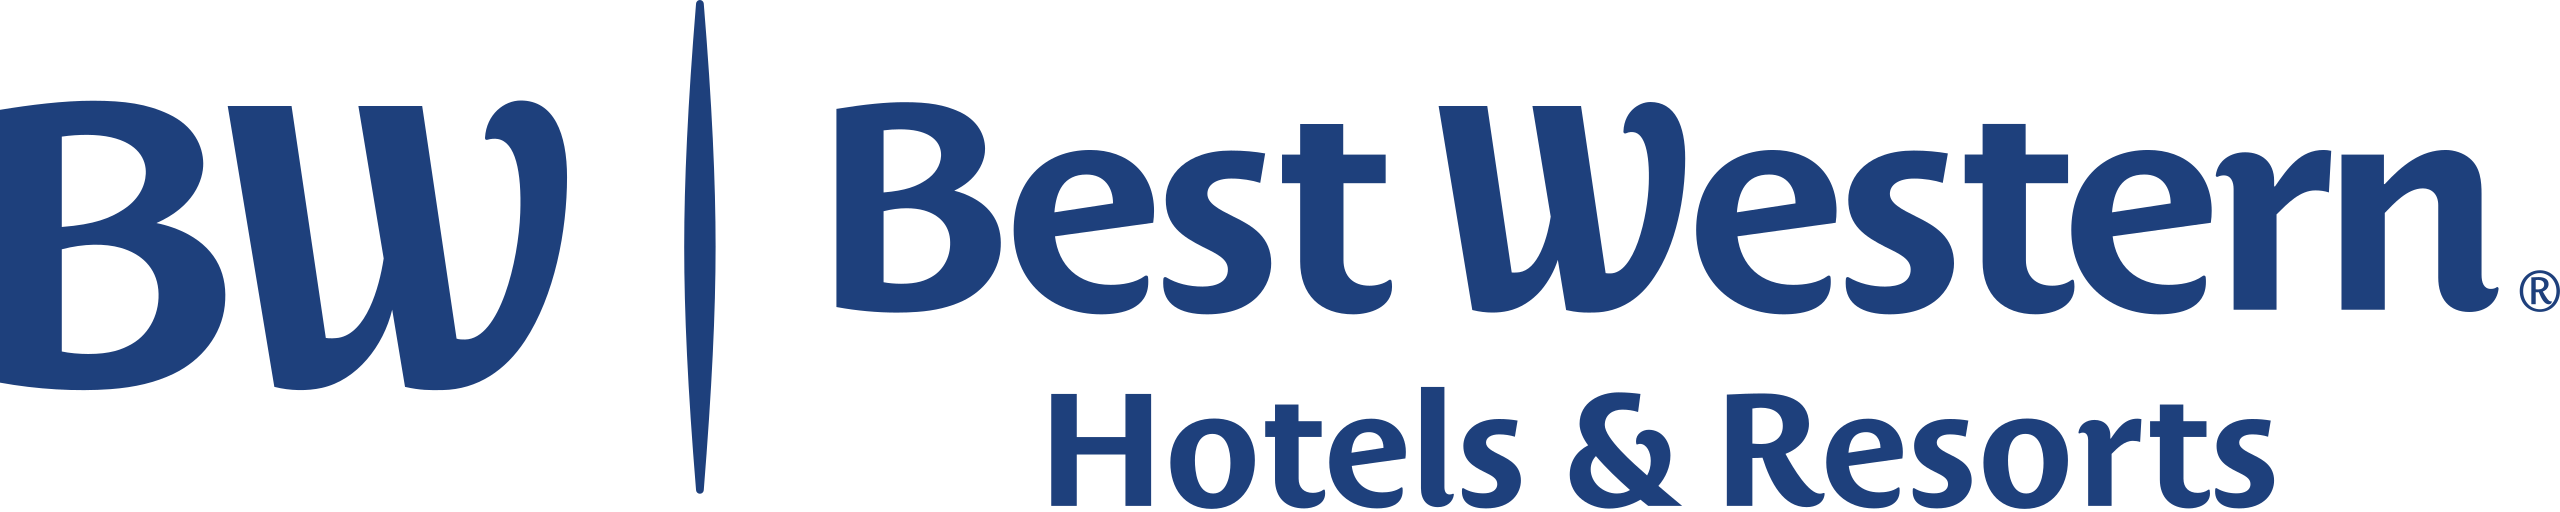 logo-Best-Western-Hotels-Resorts-2